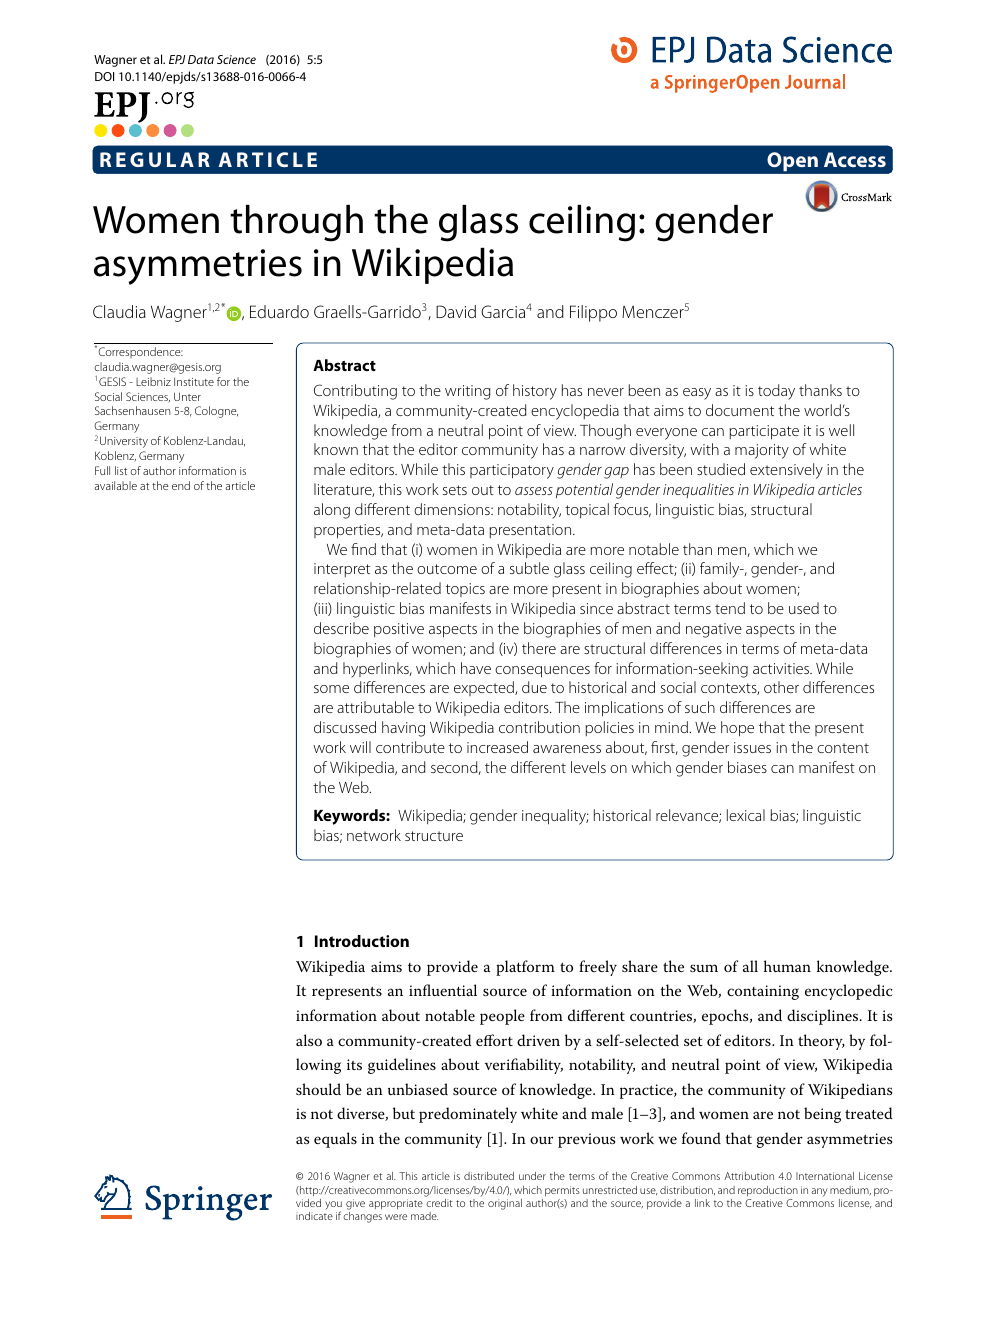 Women Through The Glass Ceiling Gender Asymmetries In